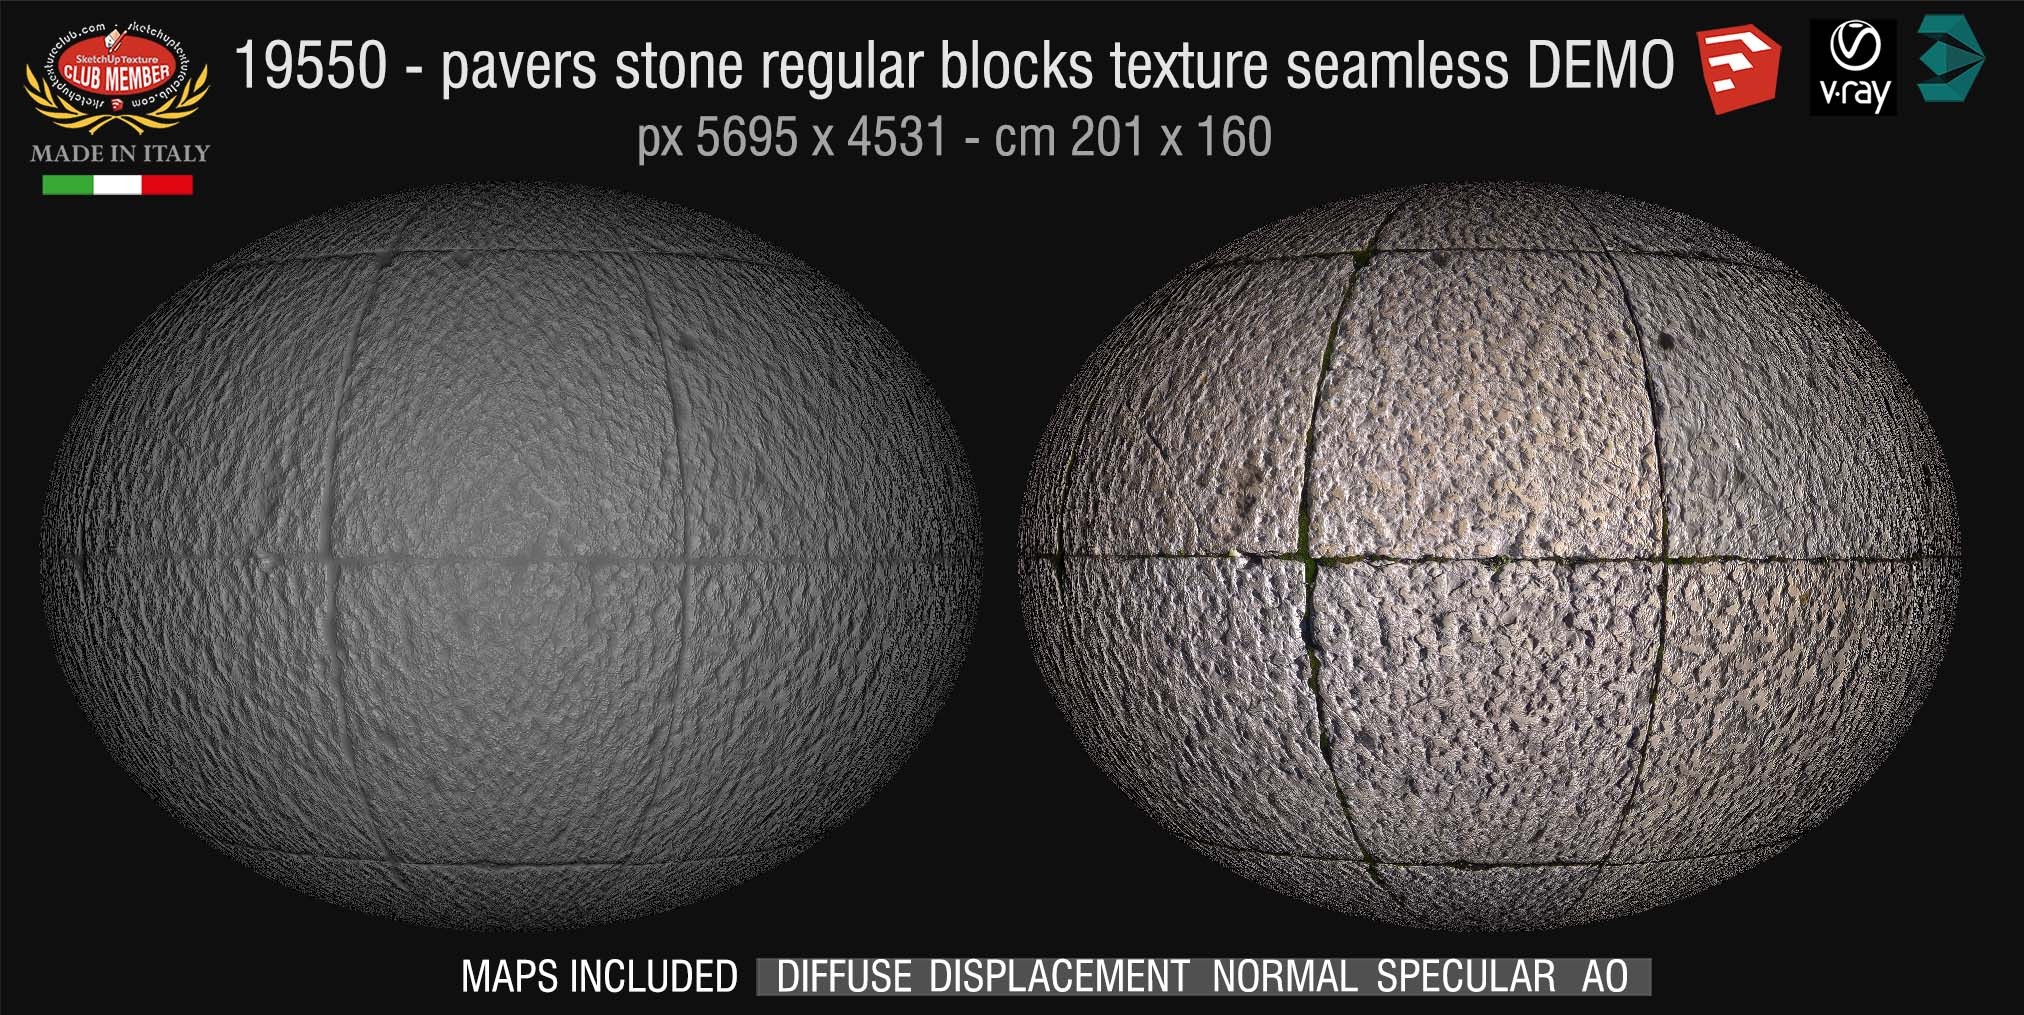 19550 HR Pavers stone regular blocks texture seamless + maps DEMO